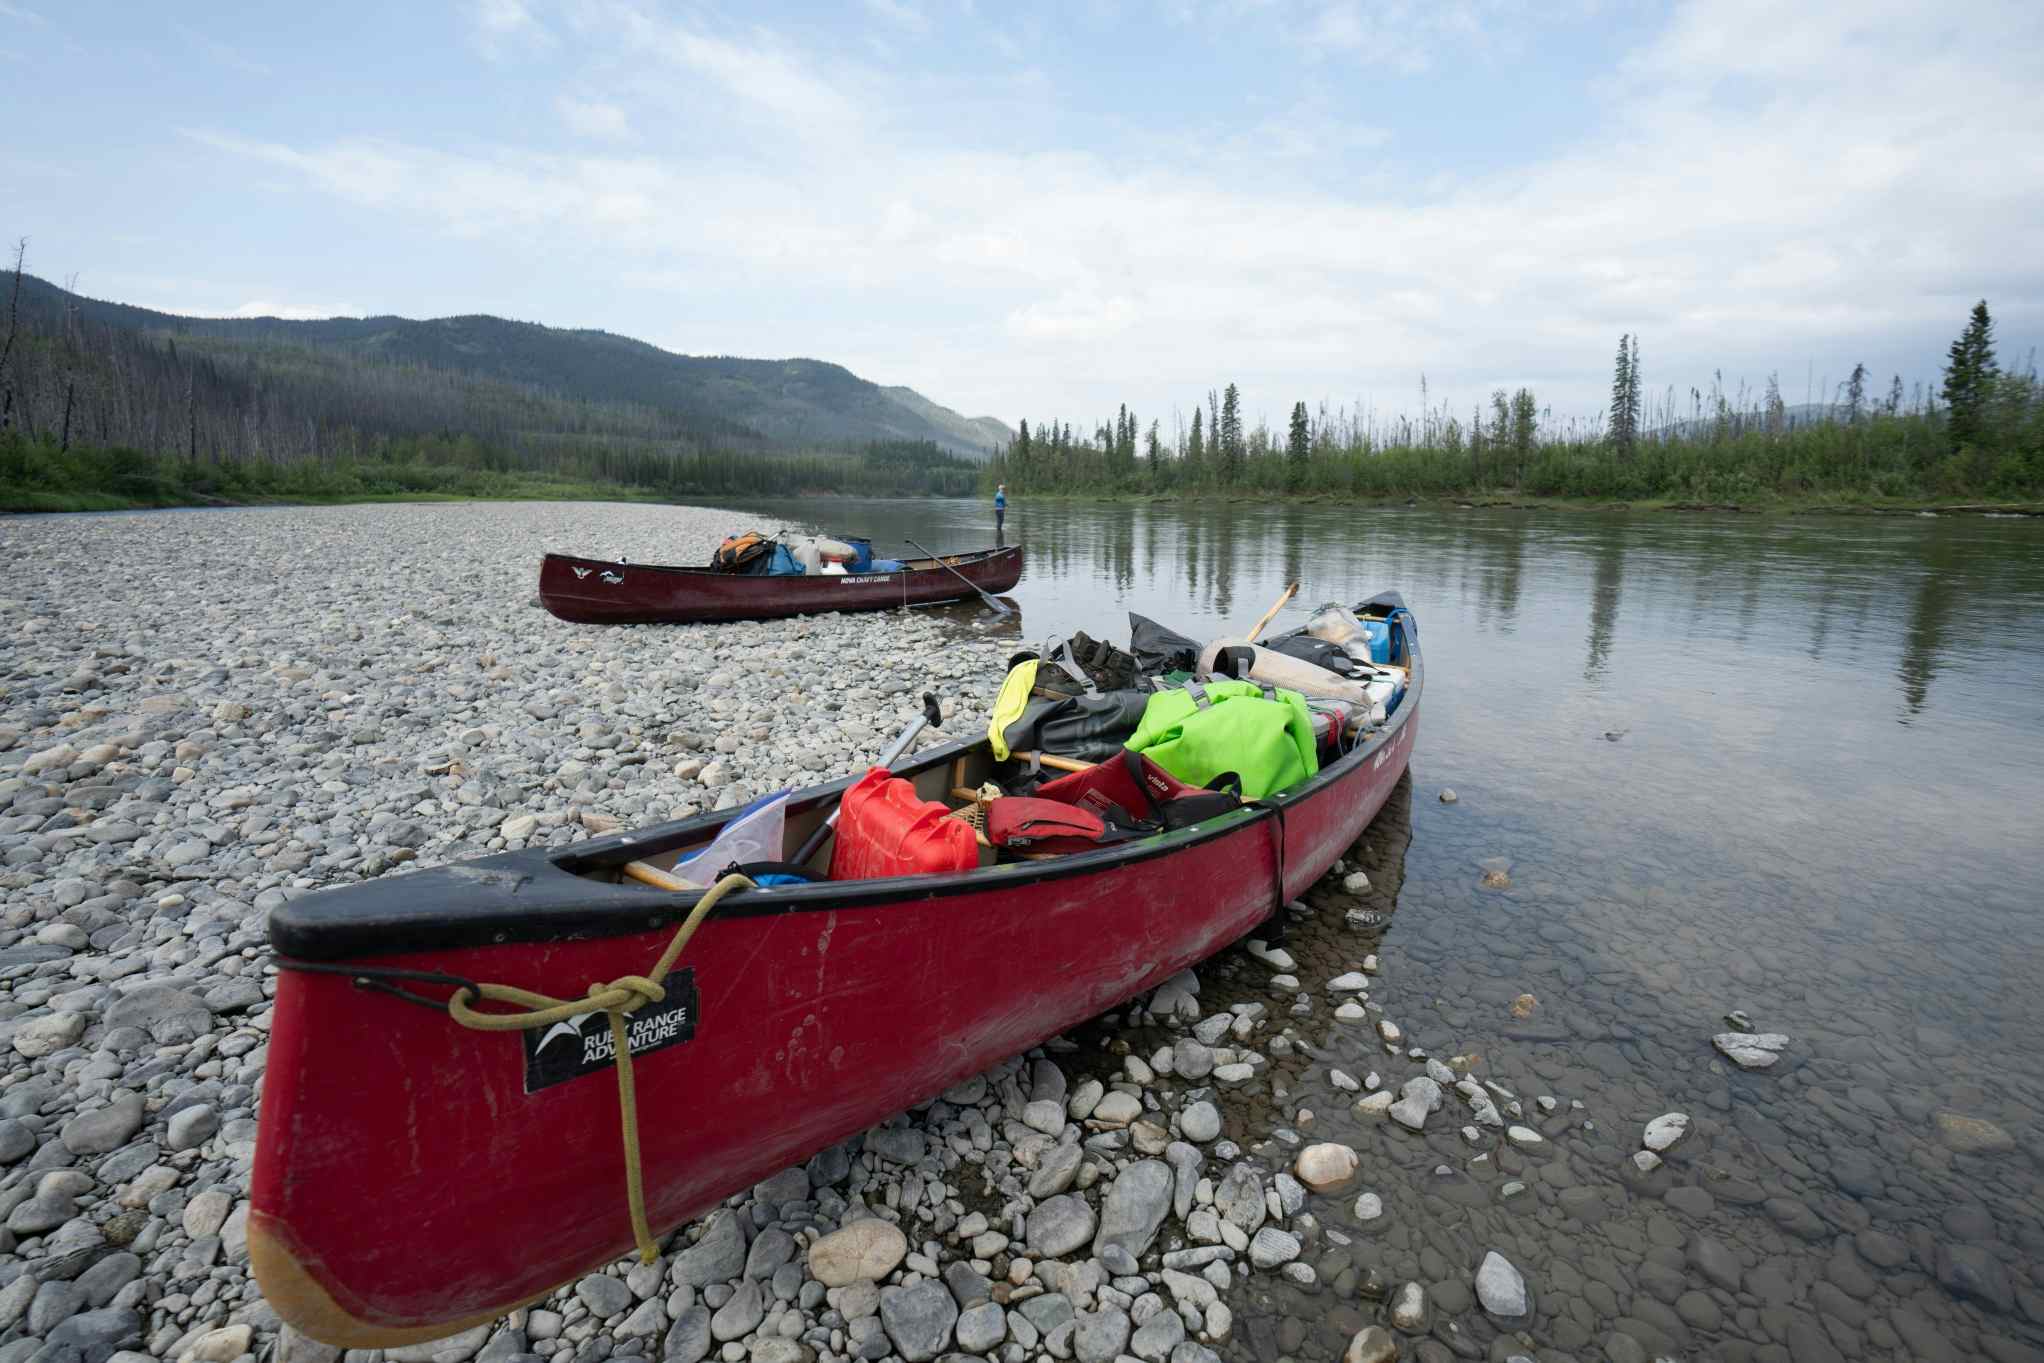 Banks of the Teslin River, Yukon, Canada. Photo: Host/Ruby Range Adventures